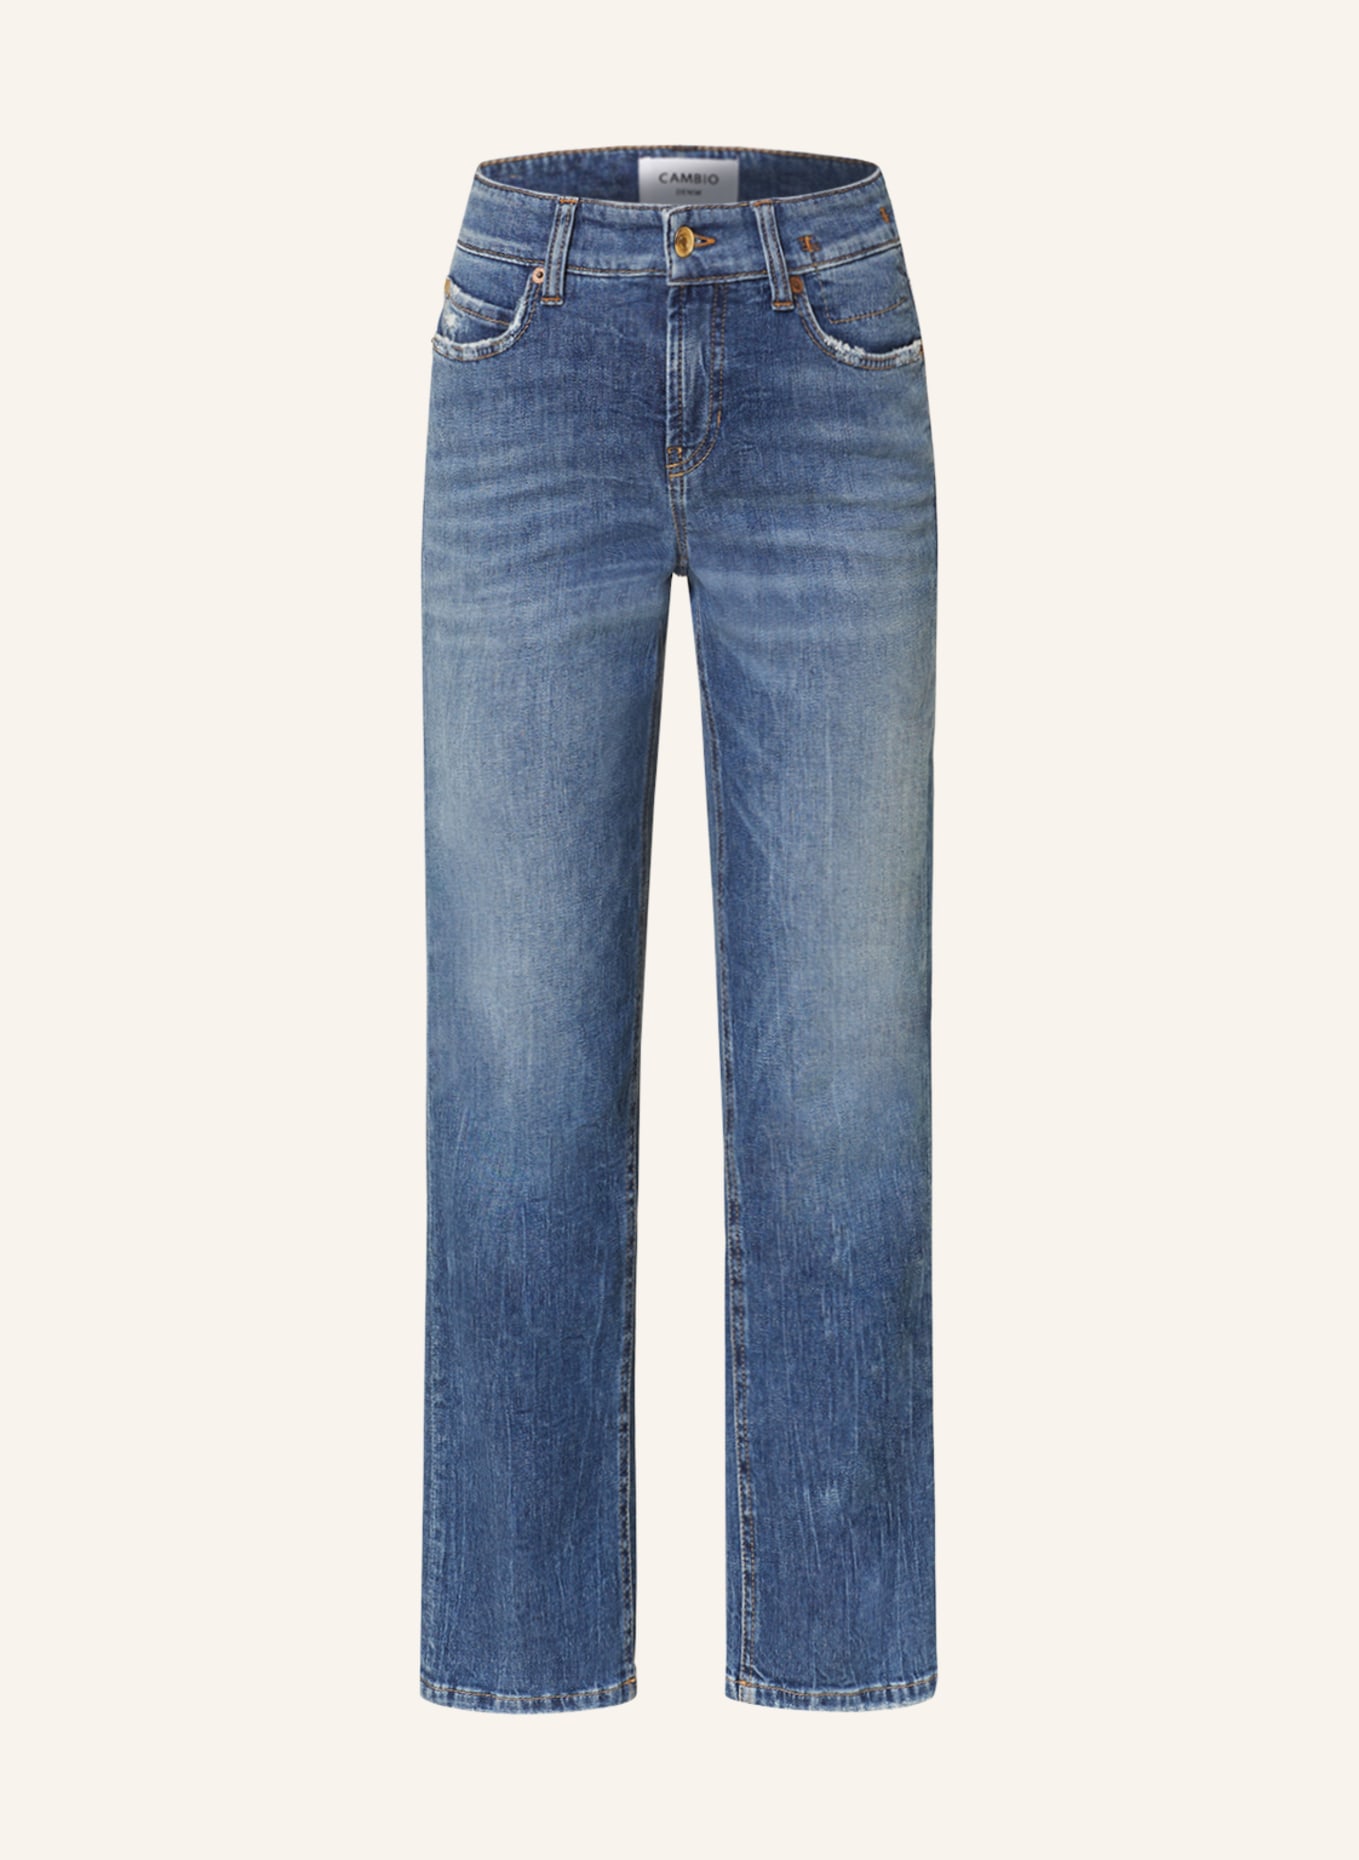 CAMBIO Straight Jeans PARIS, Farbe: 5167 authentic dark scratched (Bild 1)